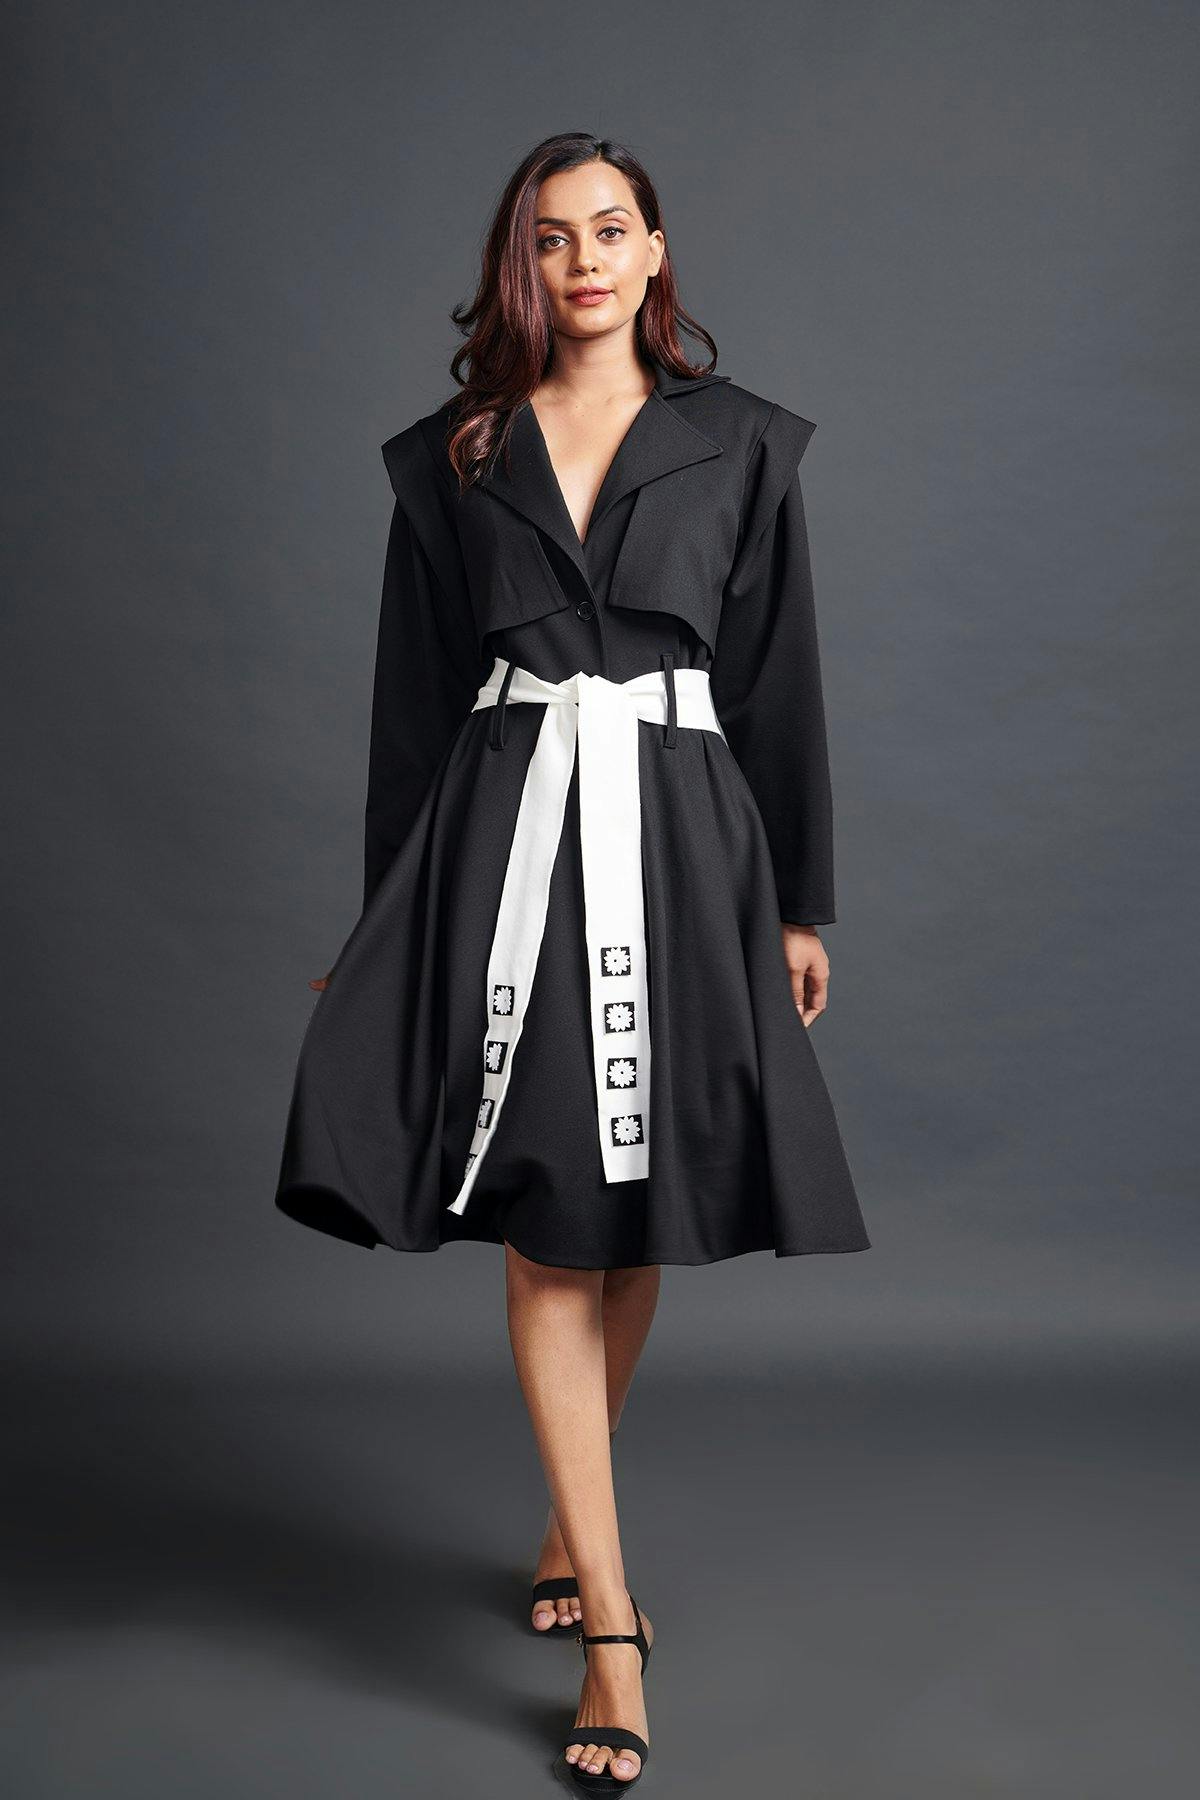 black jacket dress with sash belt, a product by Deepika Arora